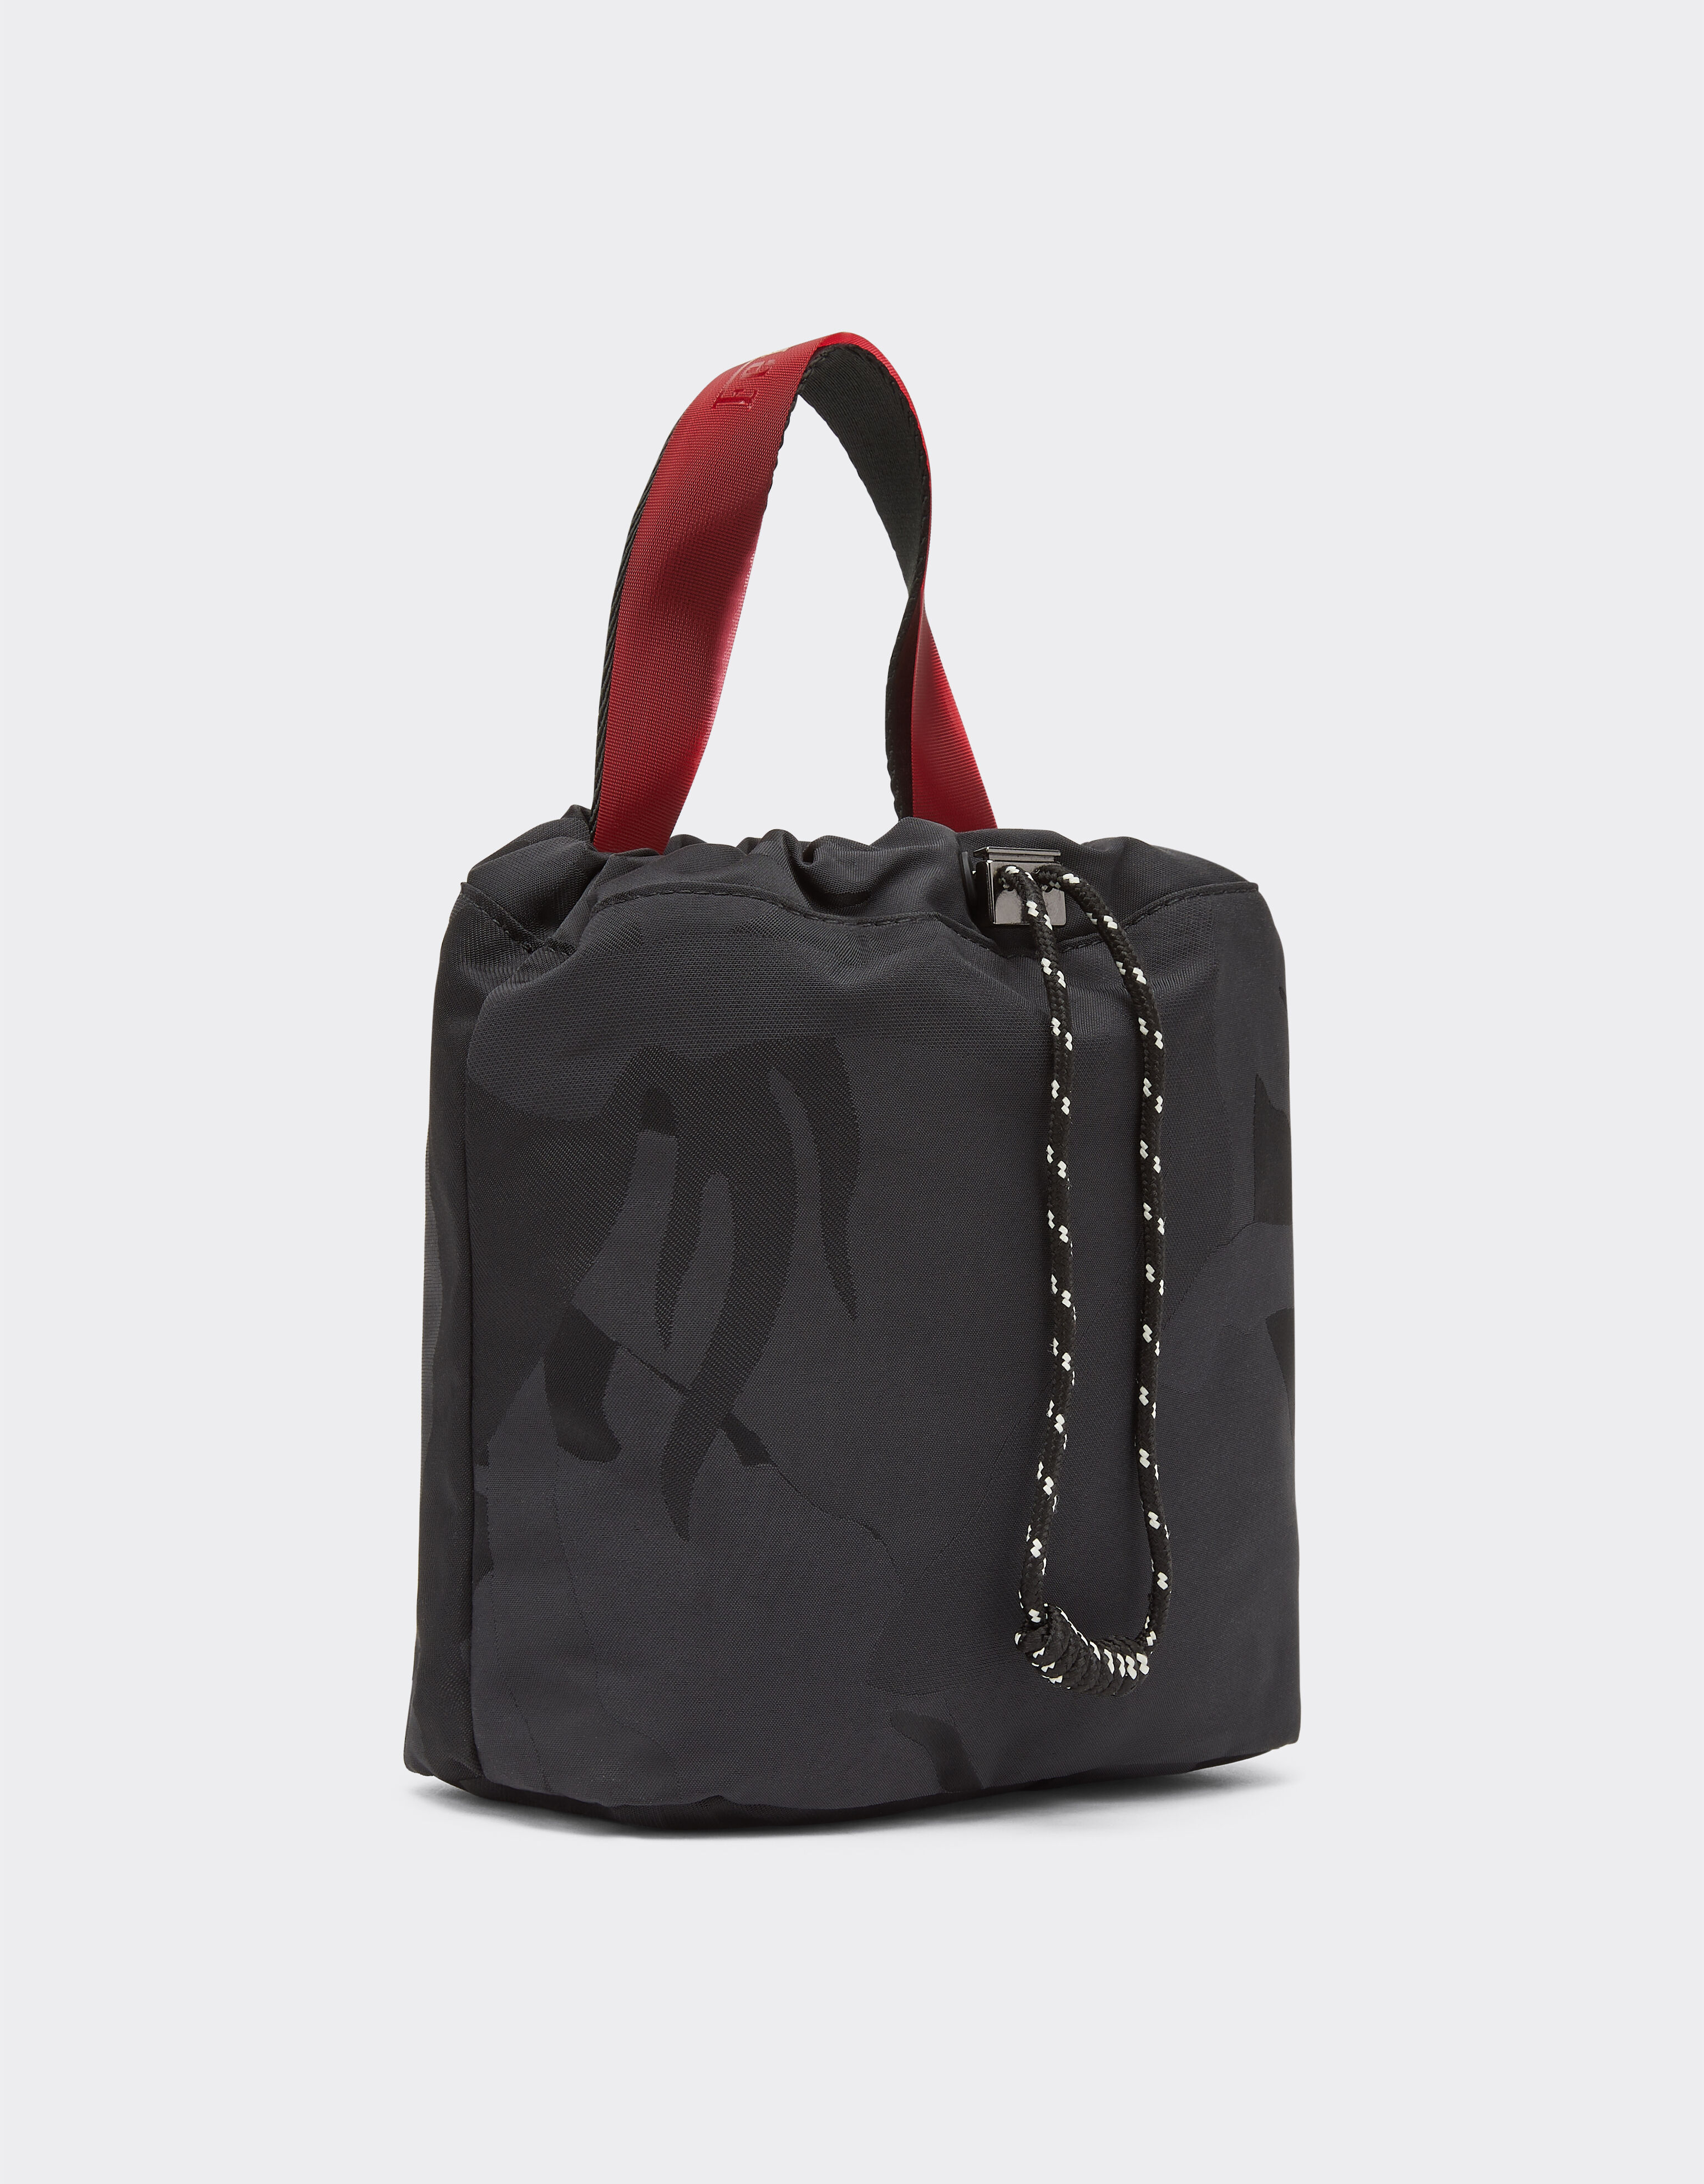 Ferrari Bucket bag in nylon with camouflage Prancing Horse motif Black 20590f